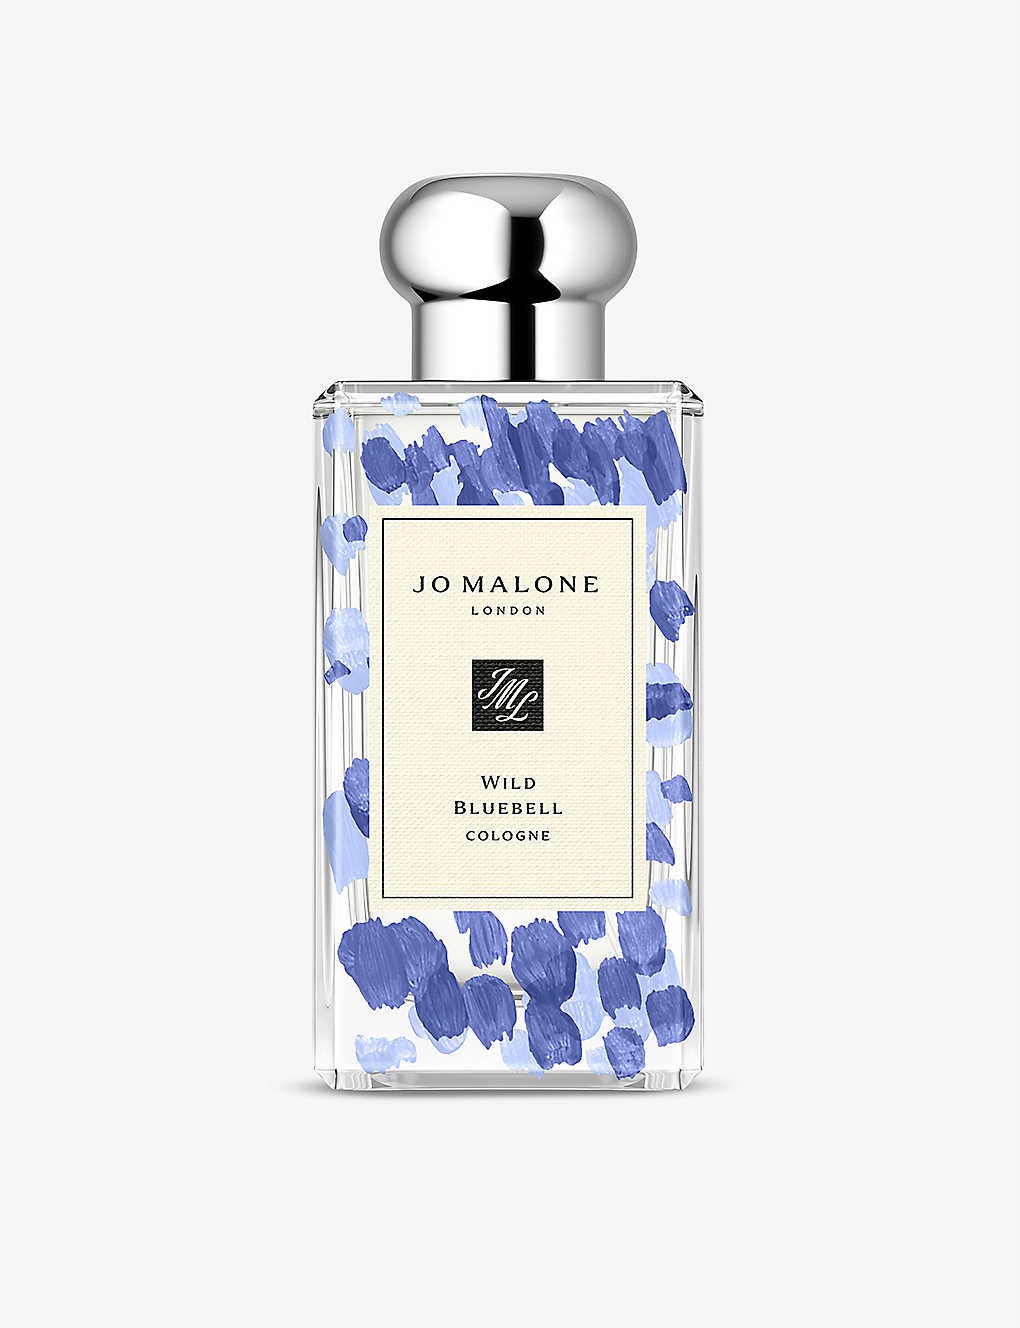 Изображение парфюма Jo Malone Wild Bluebell Limited Edition